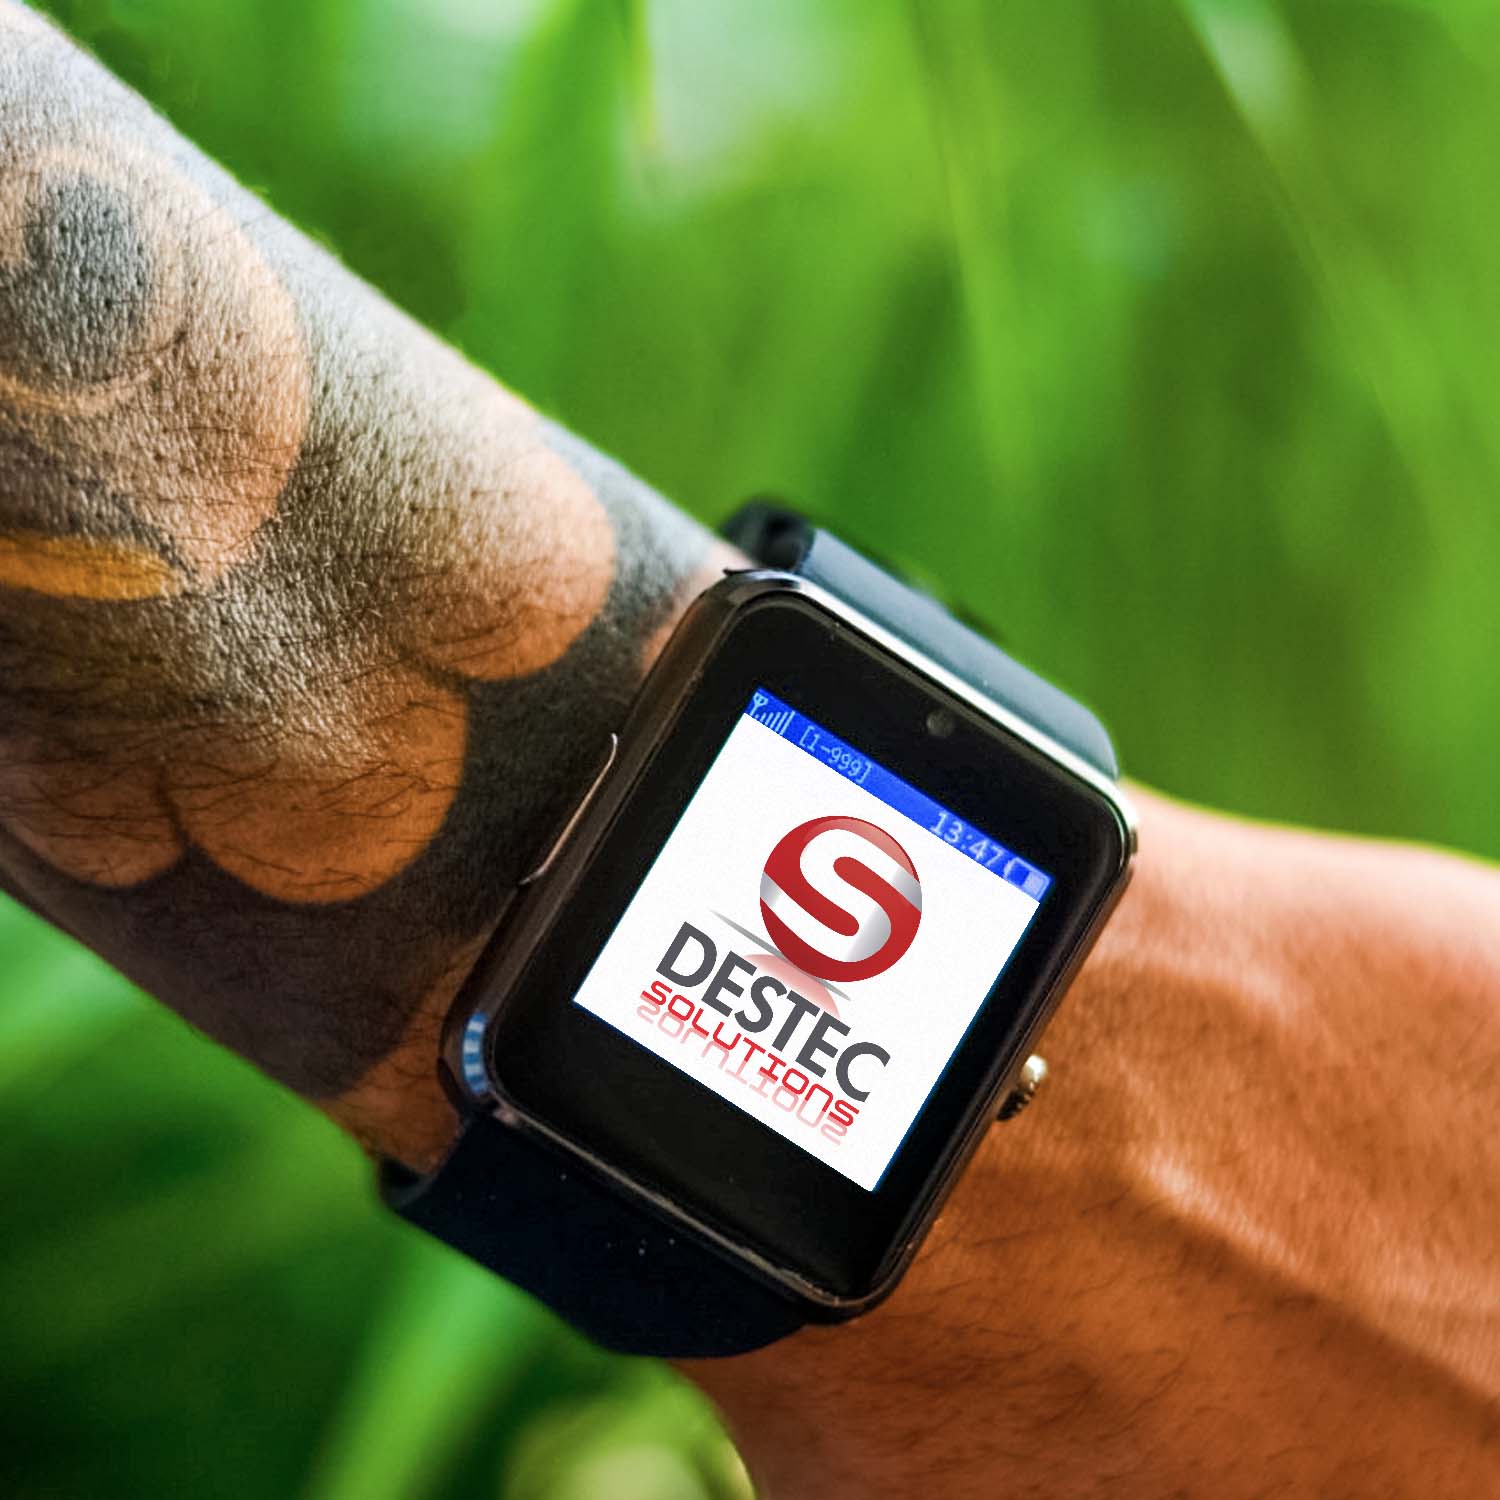 L4 Smart Watch photo in a wrist